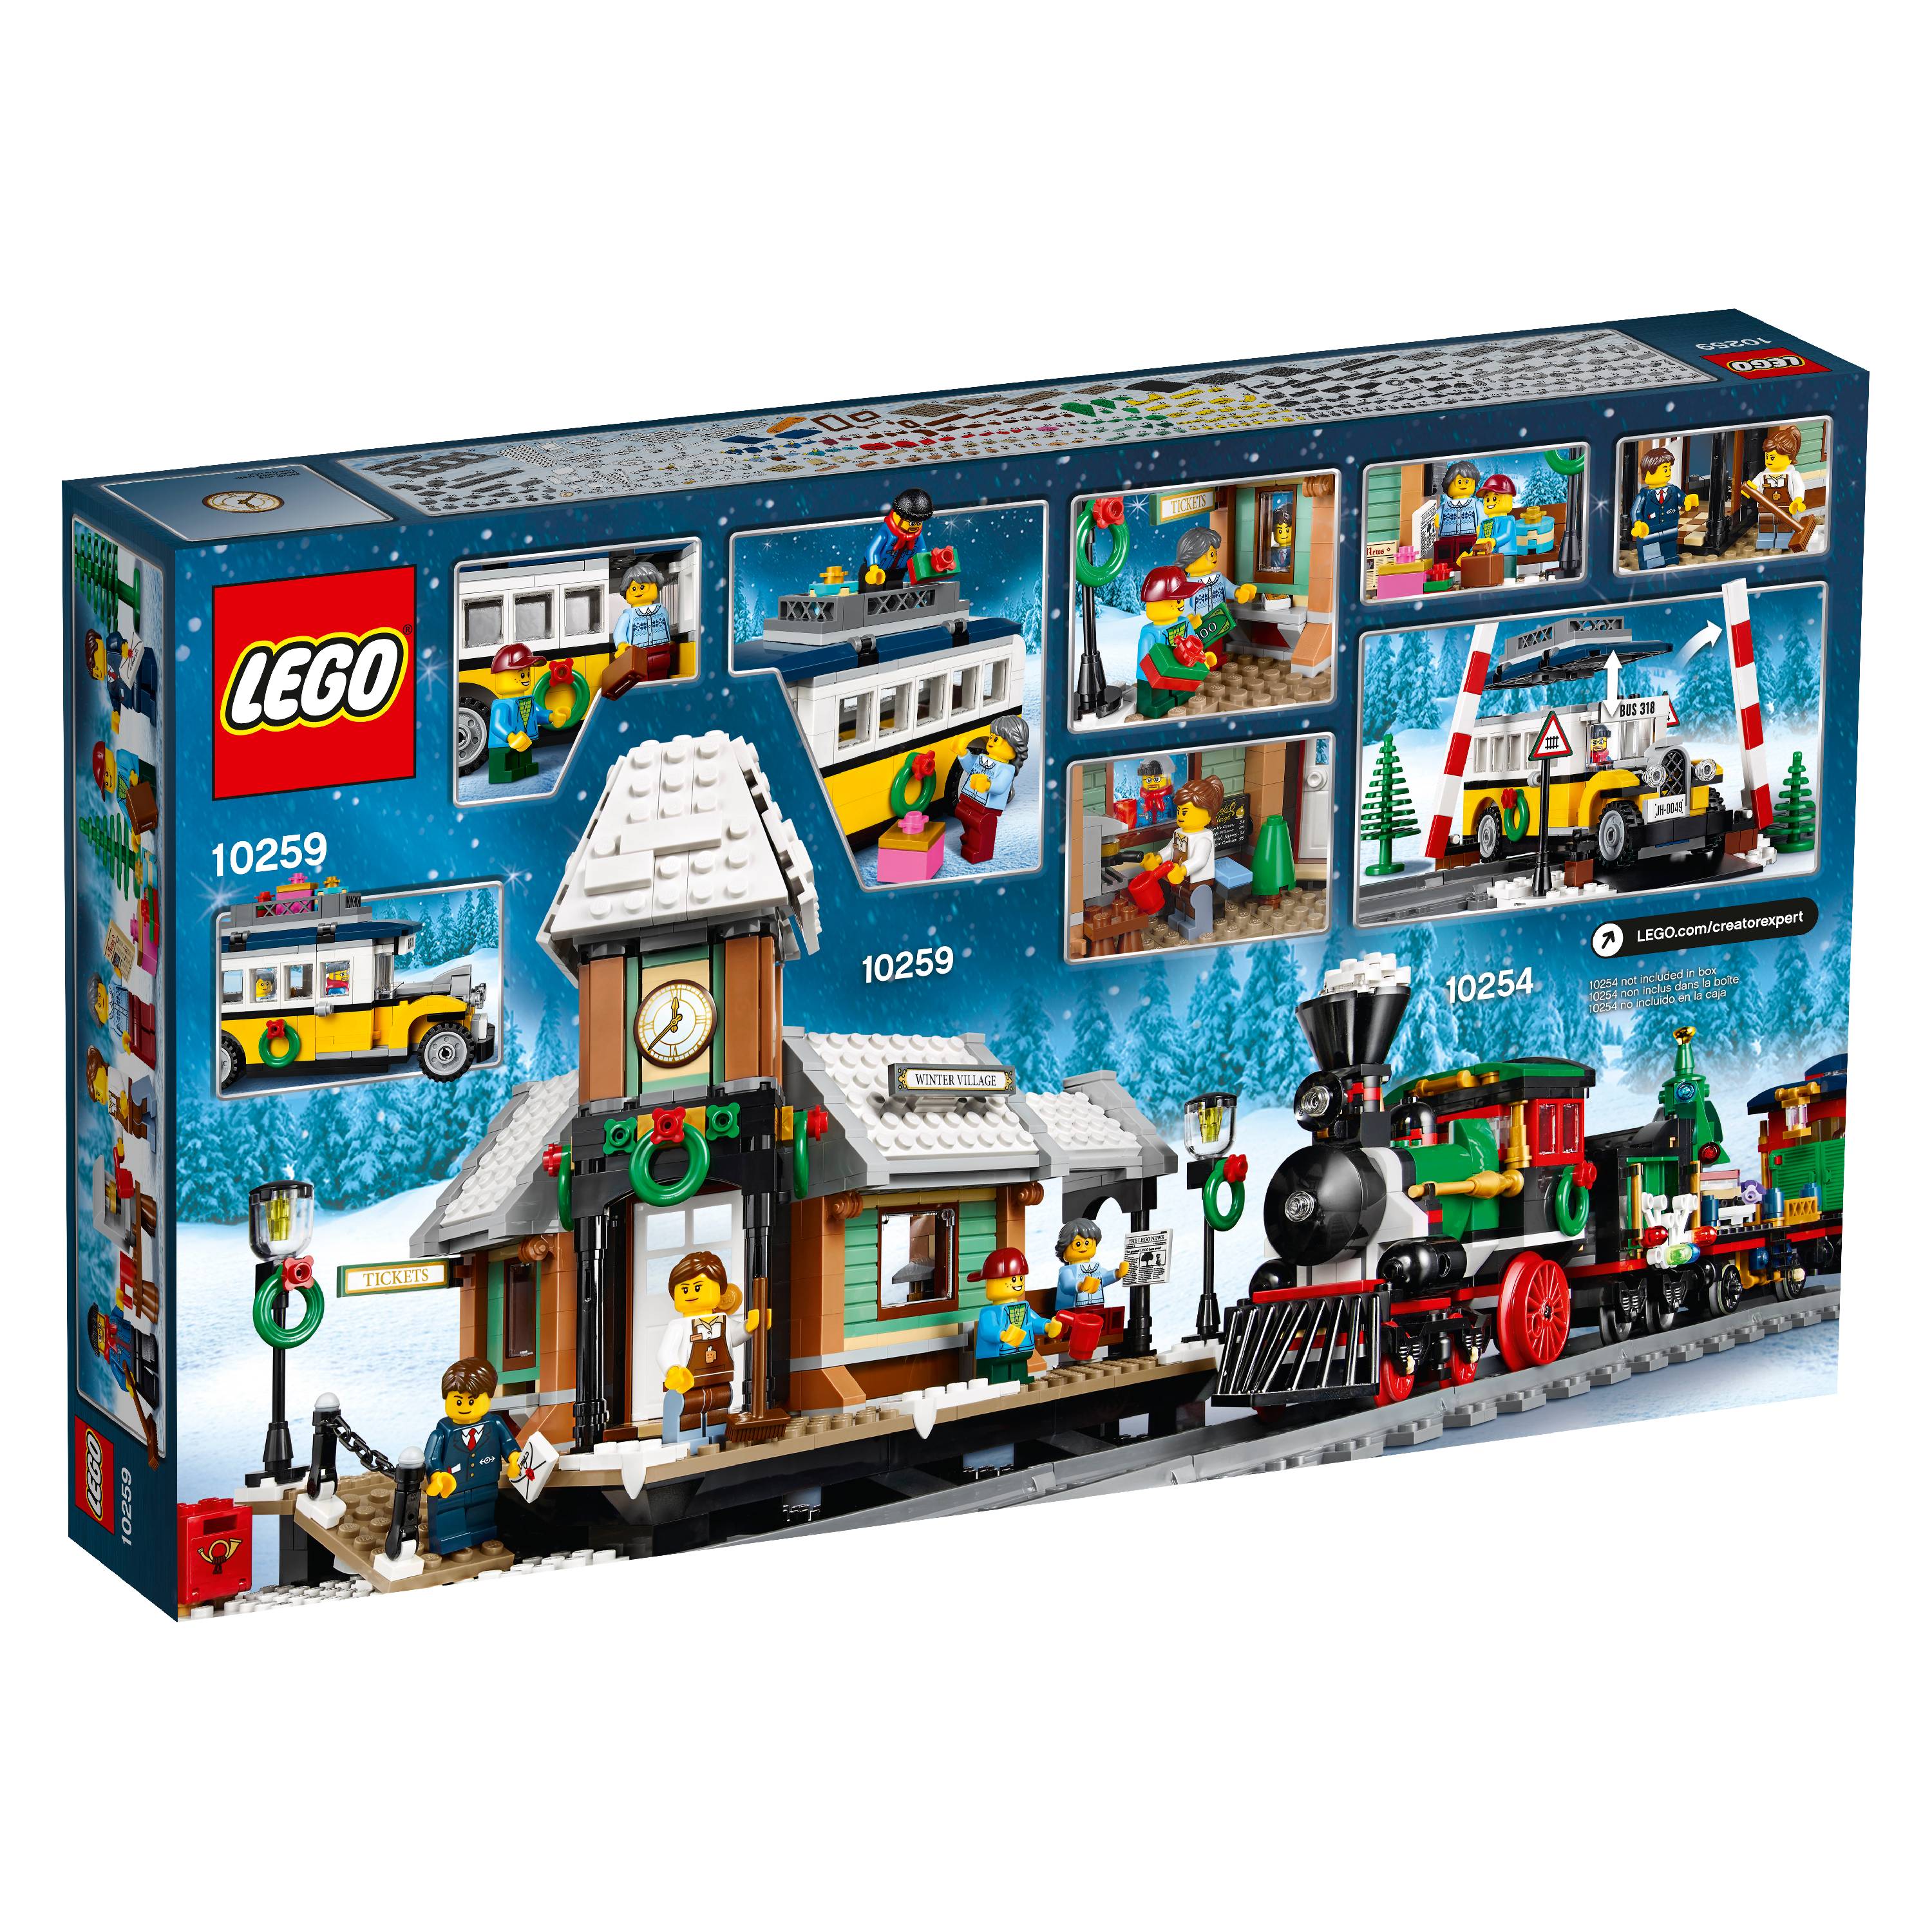 LEGO Creator Expert Winter Village Station 10259 - image 5 of 7